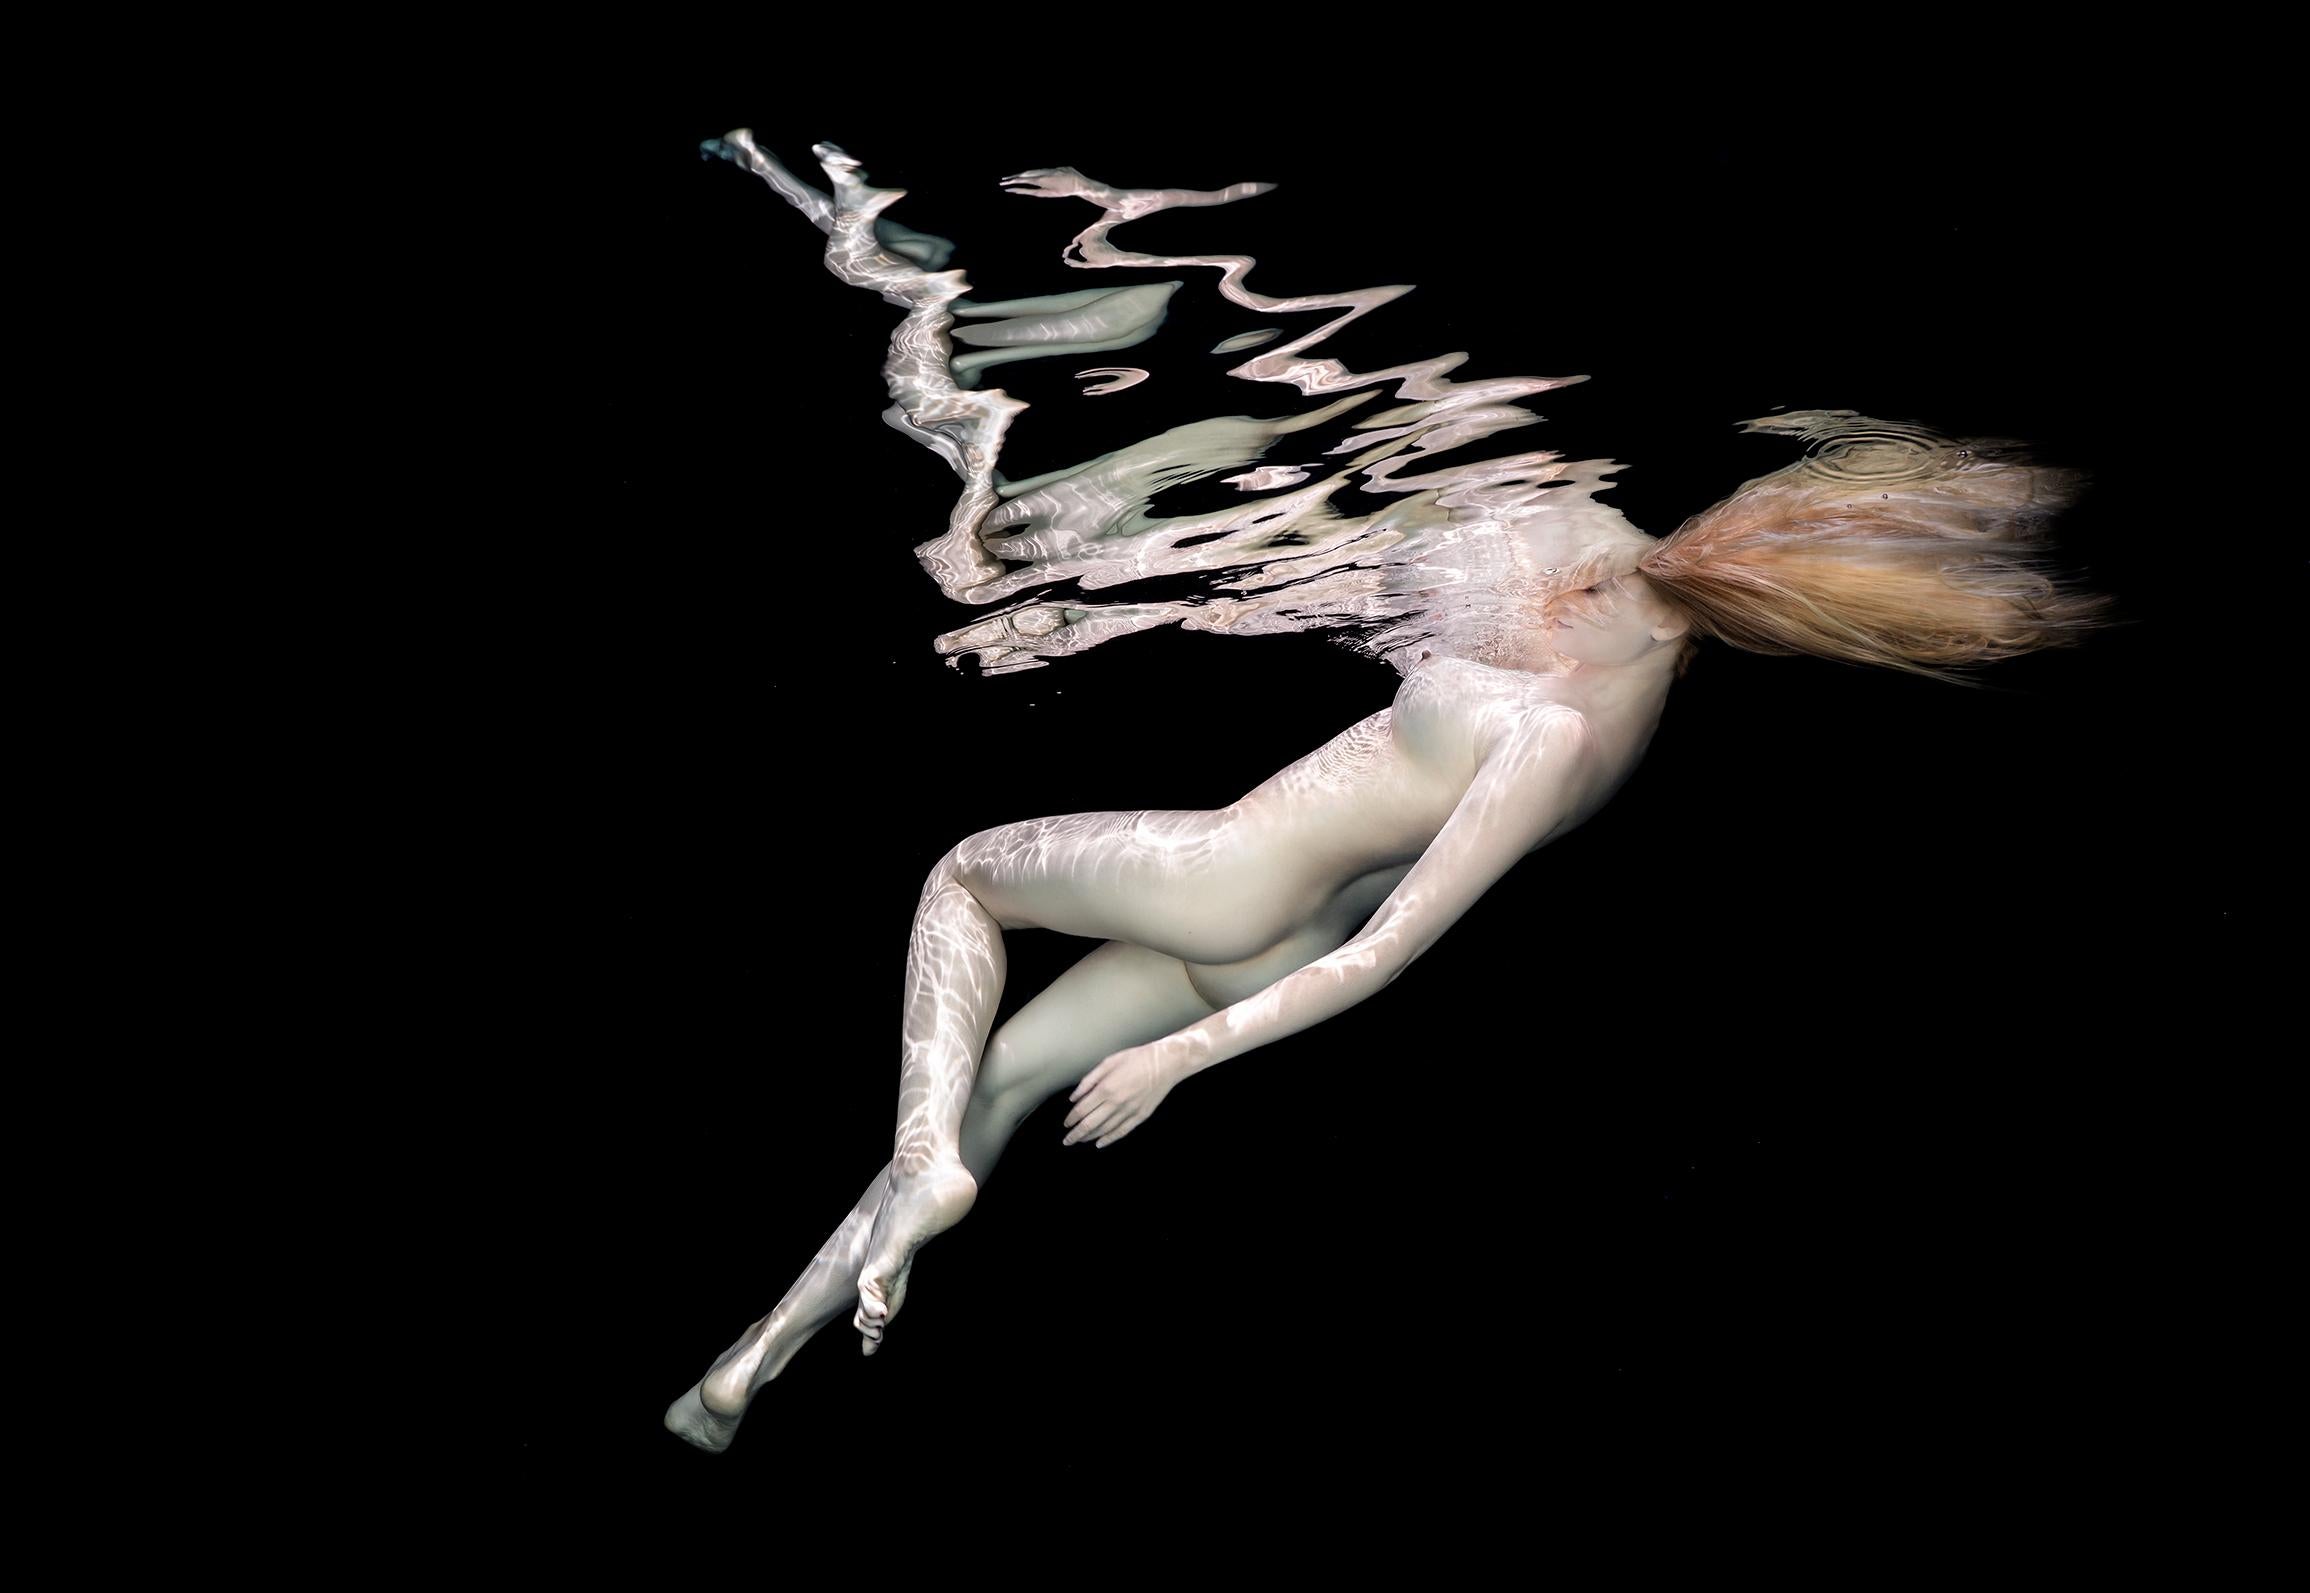 Alex Sher Figurative Photograph - Porcelain III - underwater nude photo - print on aluminum 8 x 12"